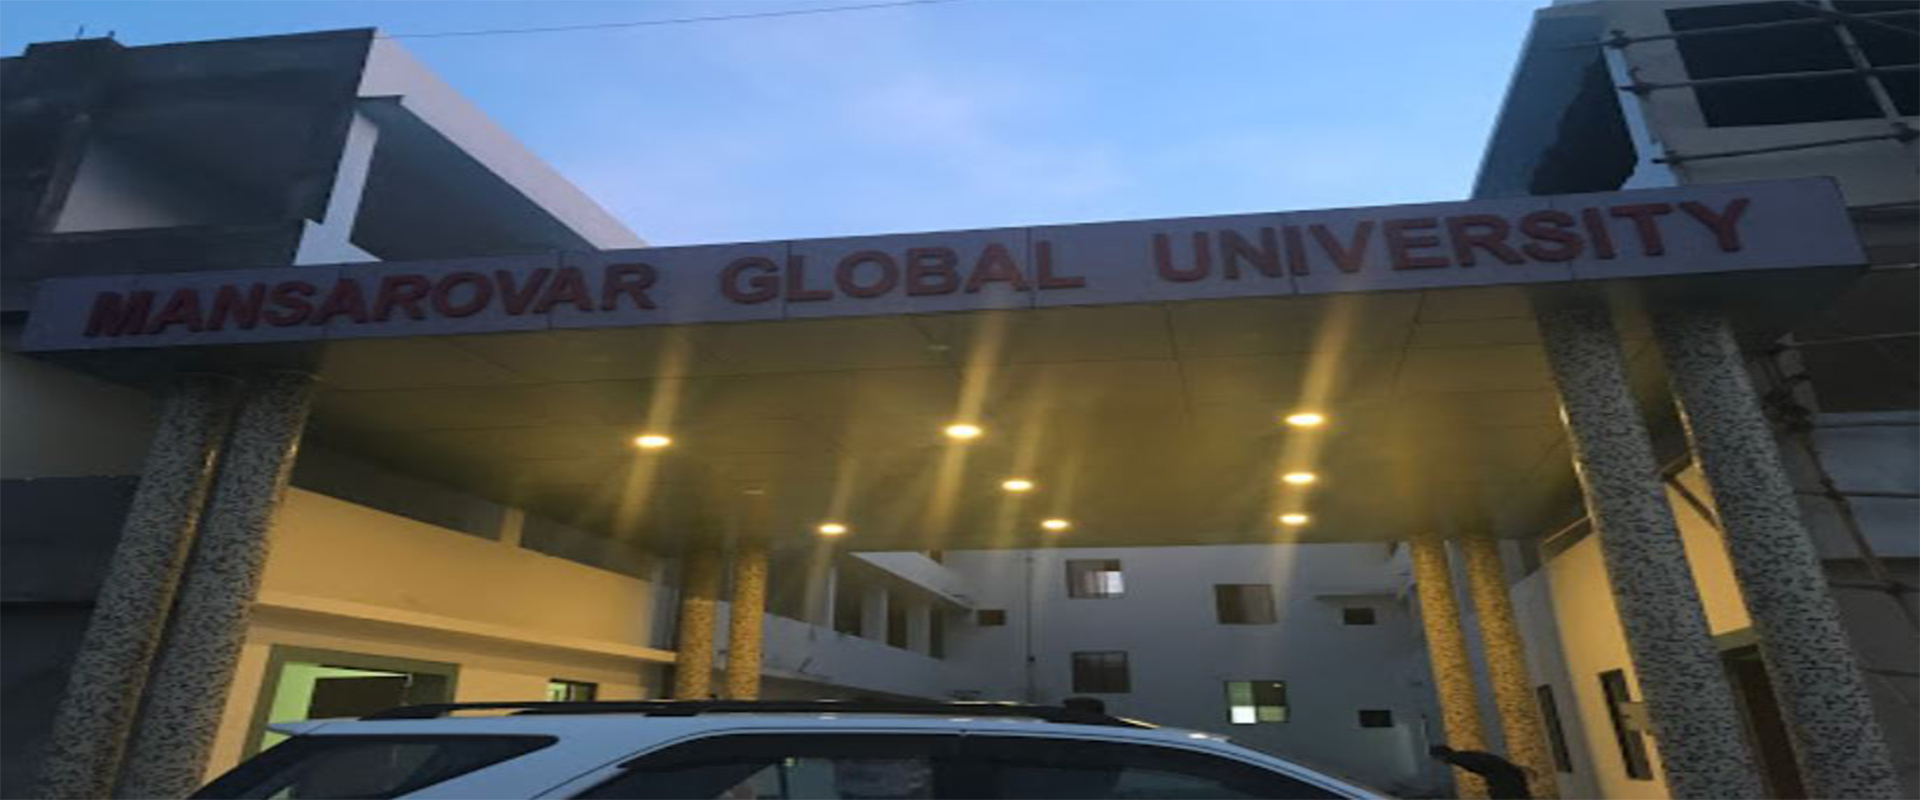 Mansarovar Global University